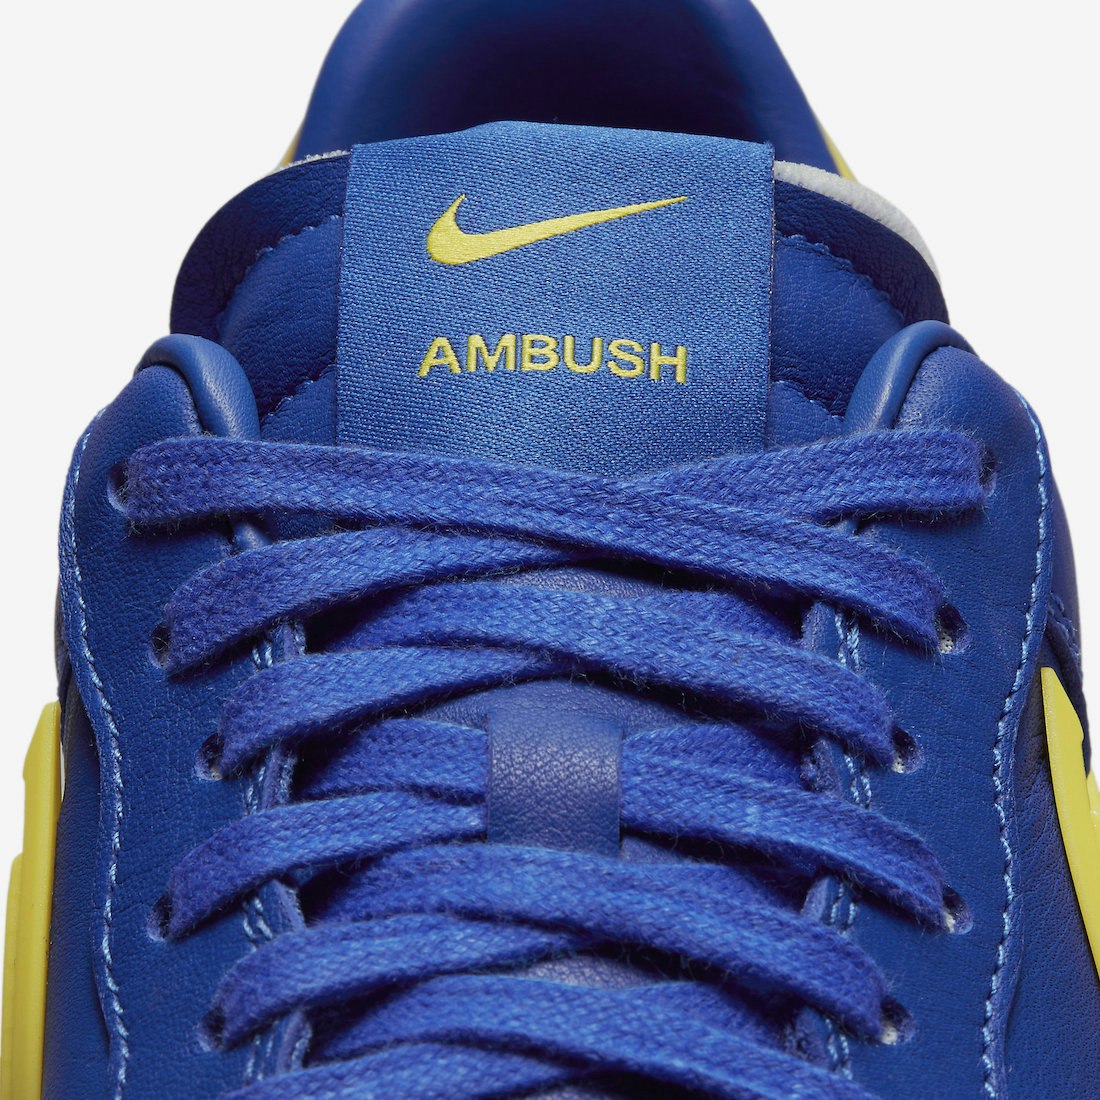 AMBUSH x Nike Air Force 1 Low "Game Royal"